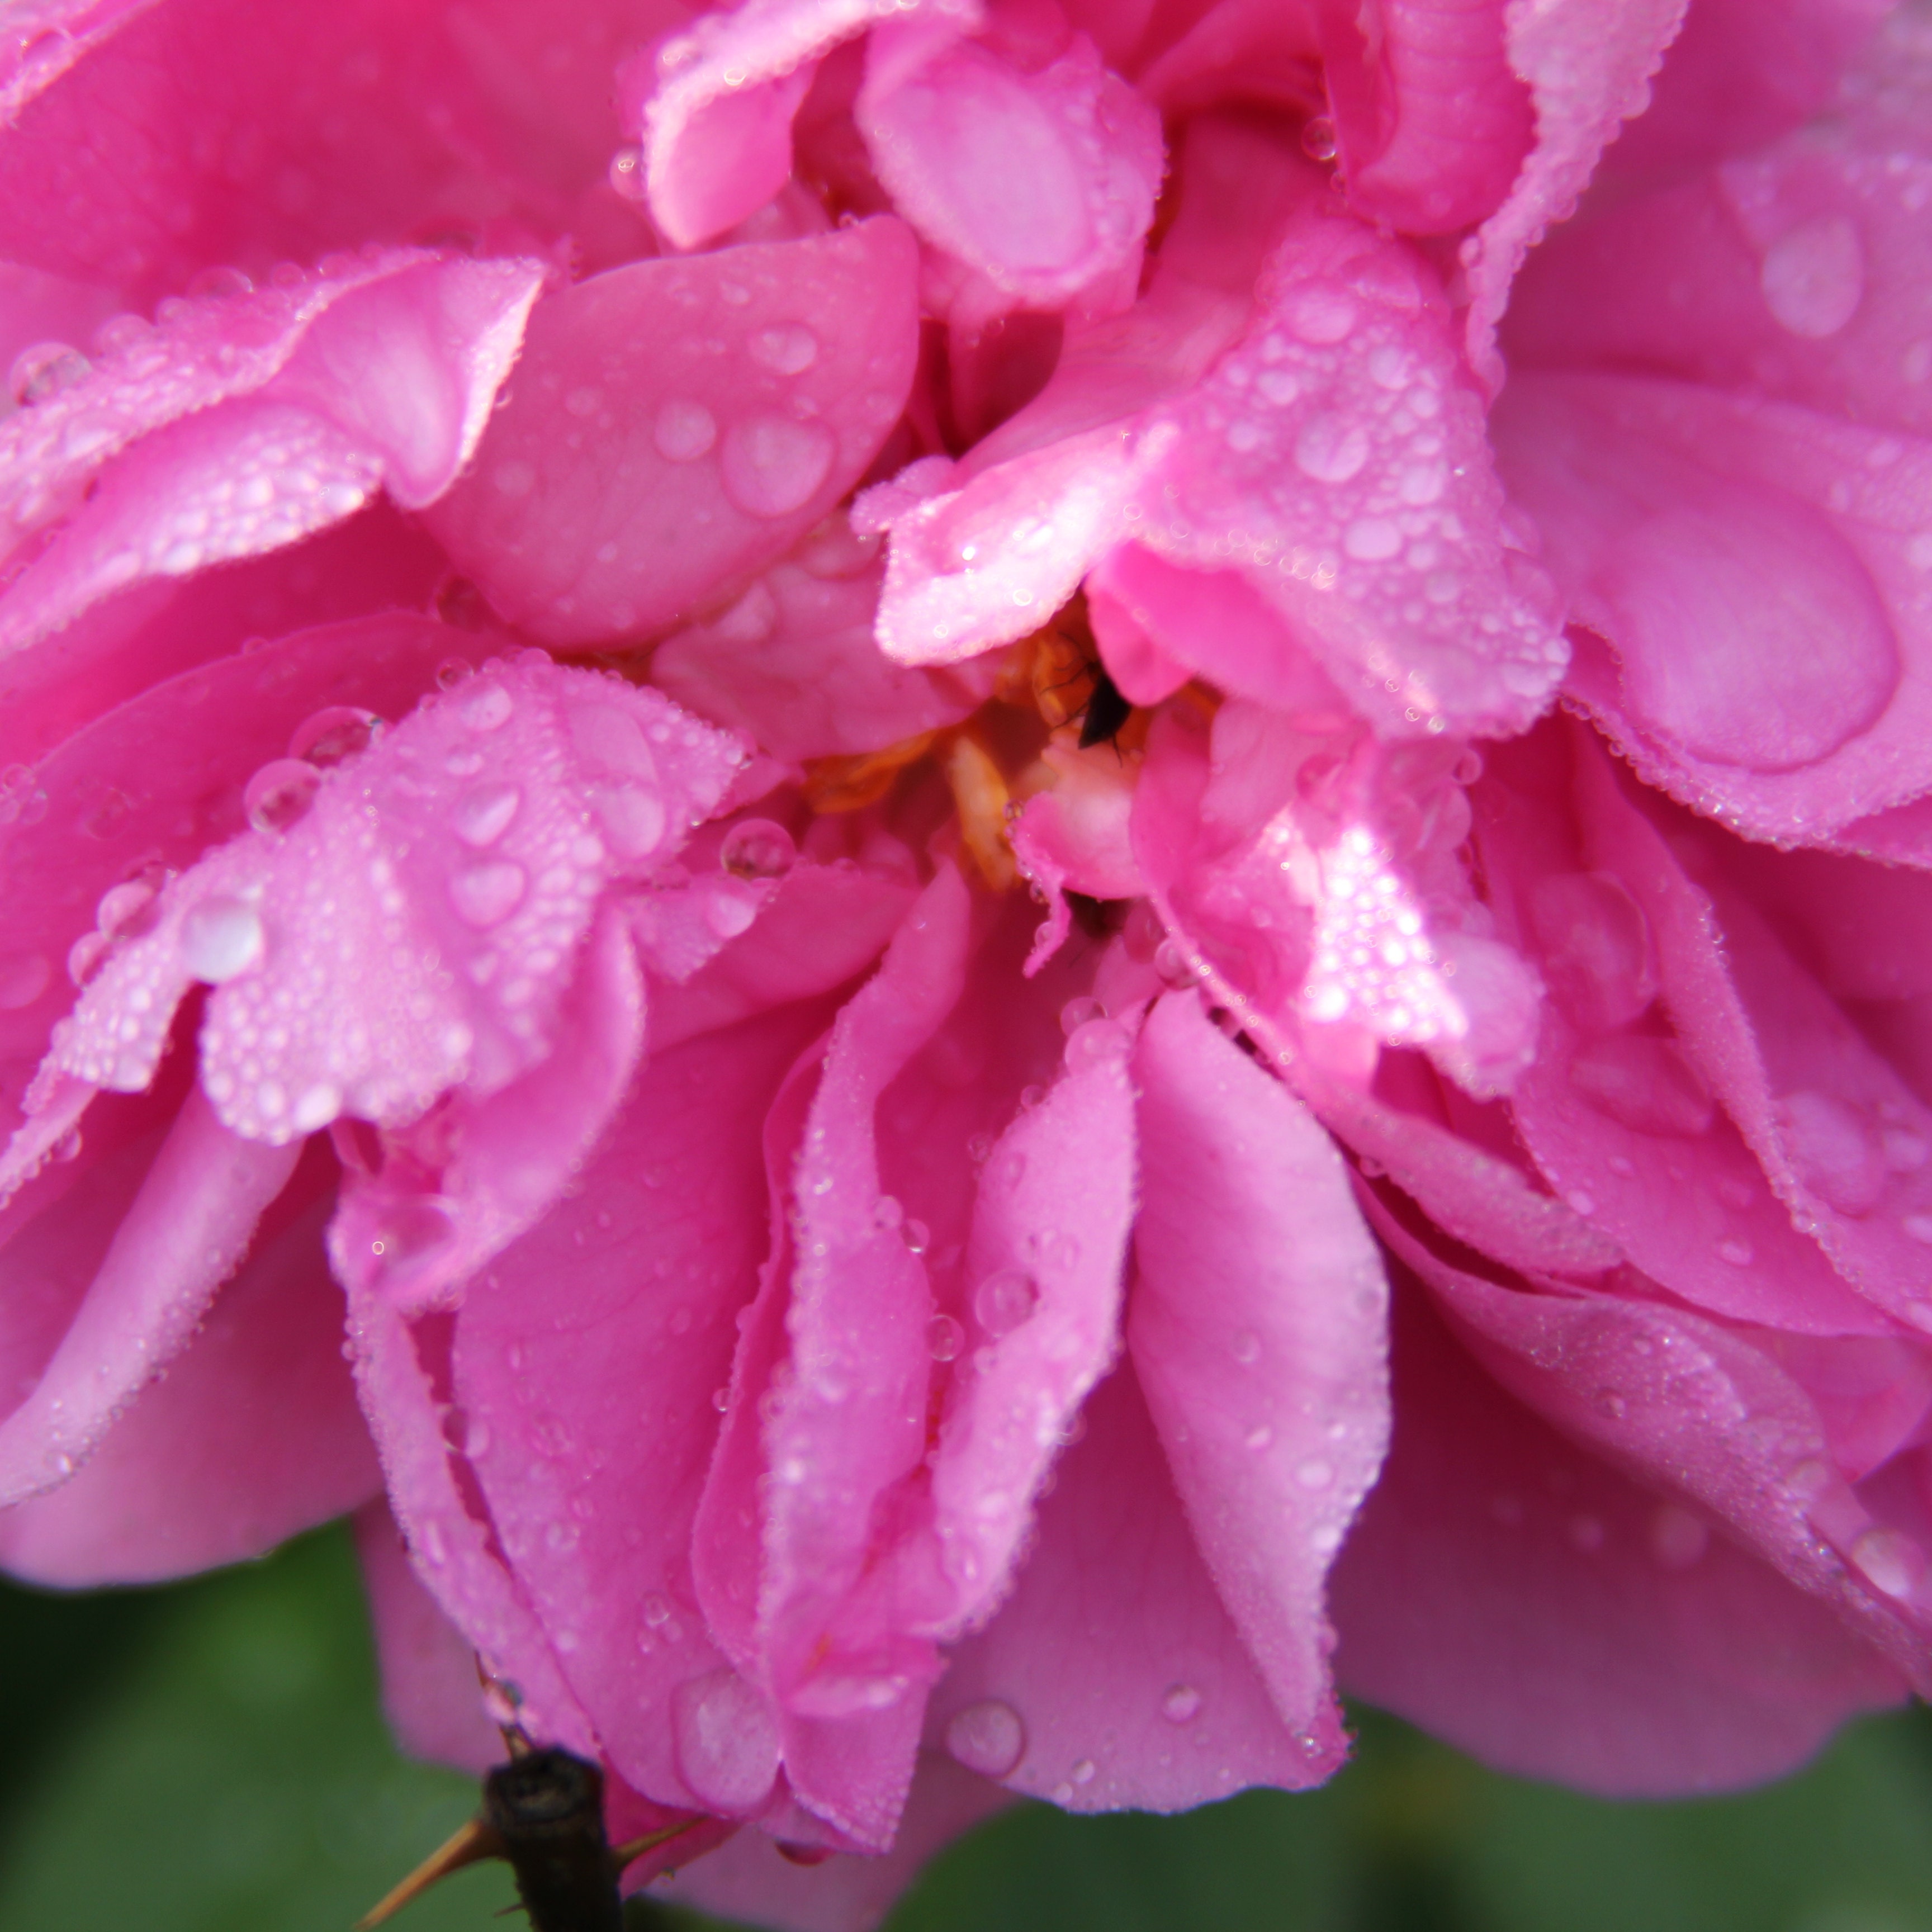 Whole Rose Buds Dried Loose Tea Rosa Damascena Superior Quality Fragrance &  Fresh Flower Buds 